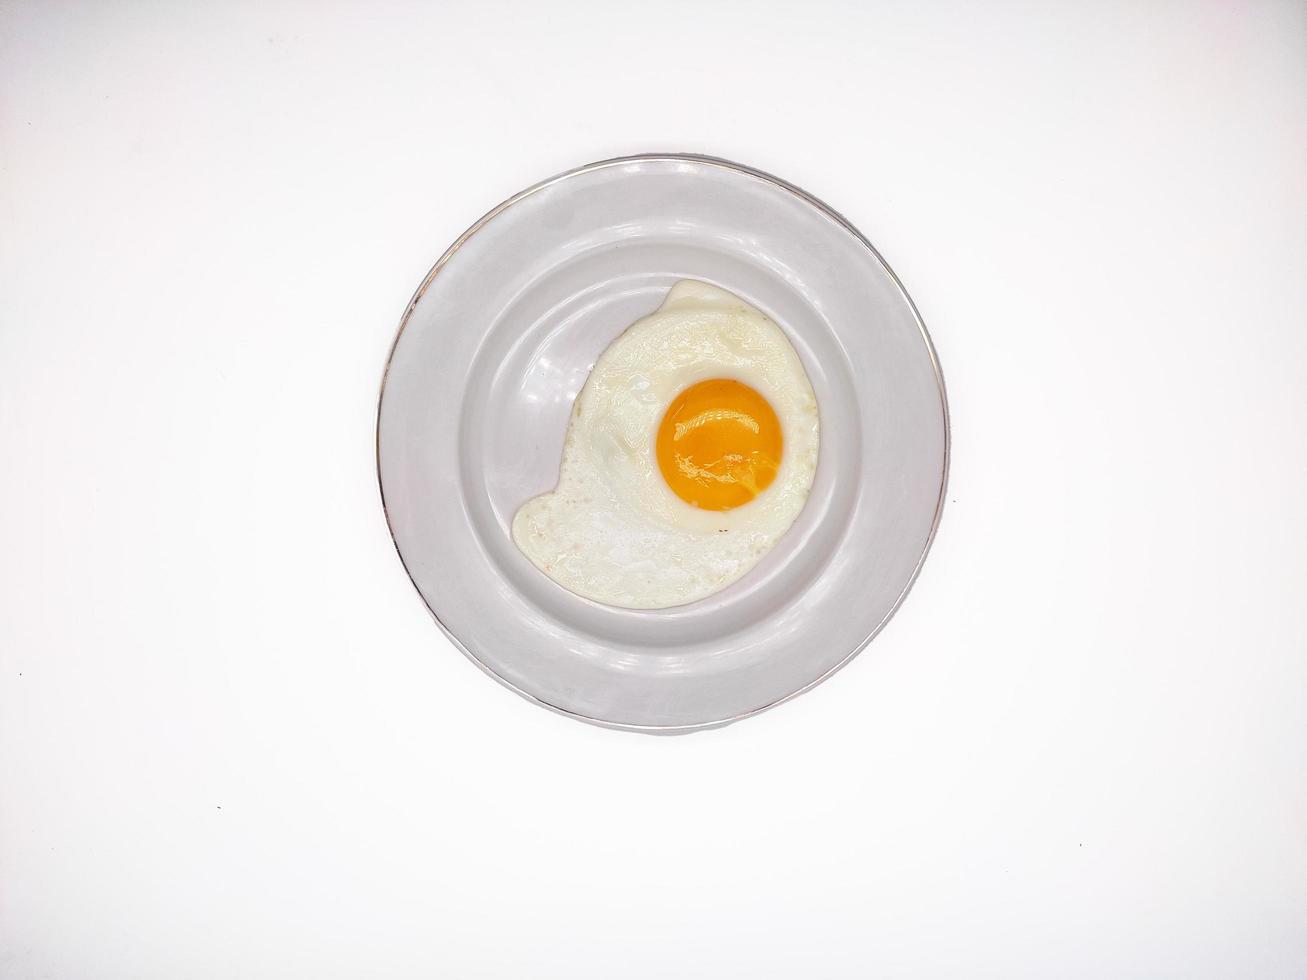 Telor Ceplok or telor mata sapi or sunny side up egg served in white plate isolated in white background photo